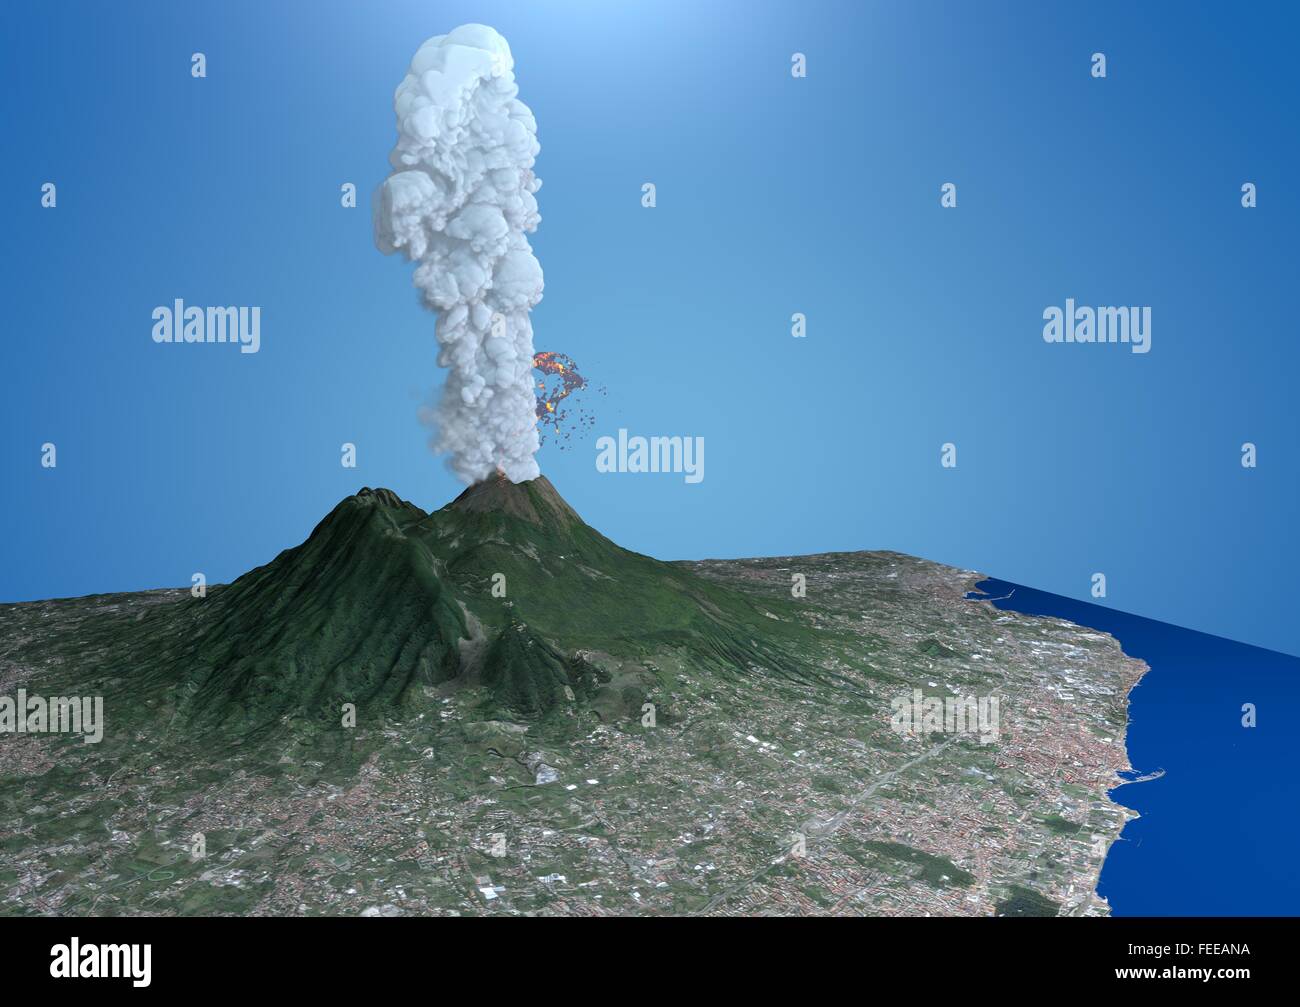 Satellite view of the volcano Vesuvius, eruption, 3d, Italy Campania Stock Photo